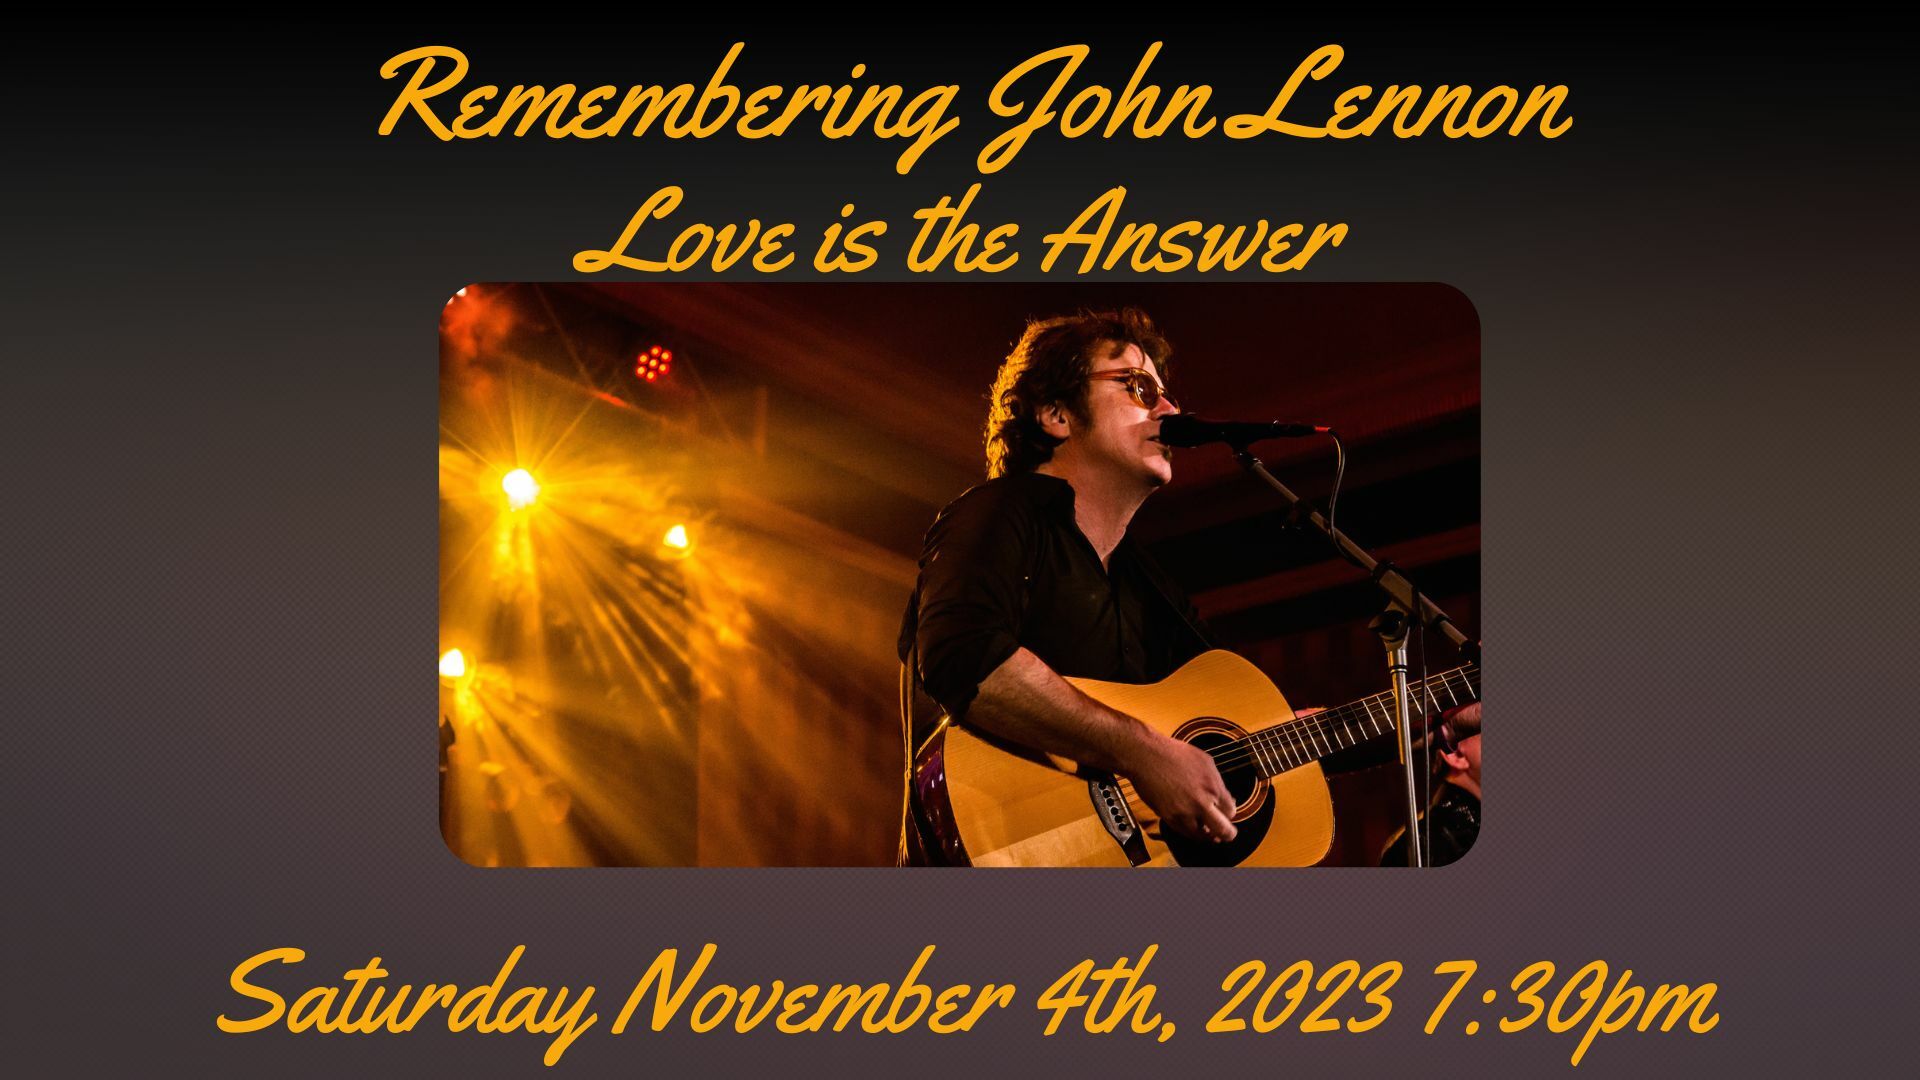 Remembering John Lennnon-Love is the Answer, Longview, Washington, United States